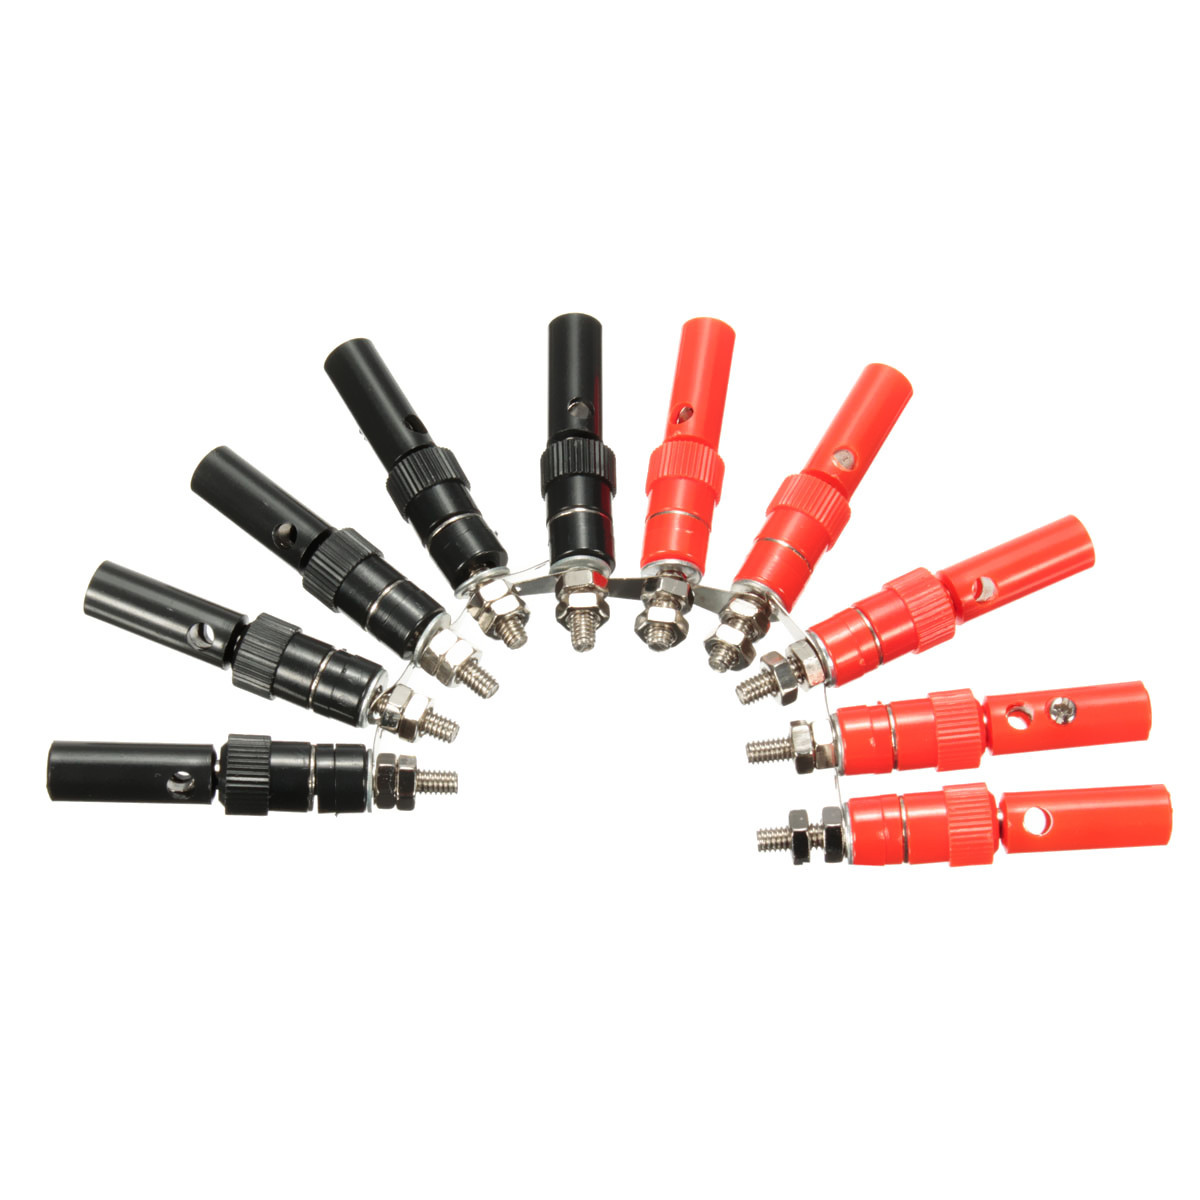 DANIU-10-Pairs-4mm-Terminal-Banana-Plug-Socket-Jack-Connectors-Instrument-Light-Tools-Black-and-Red-1046083-1